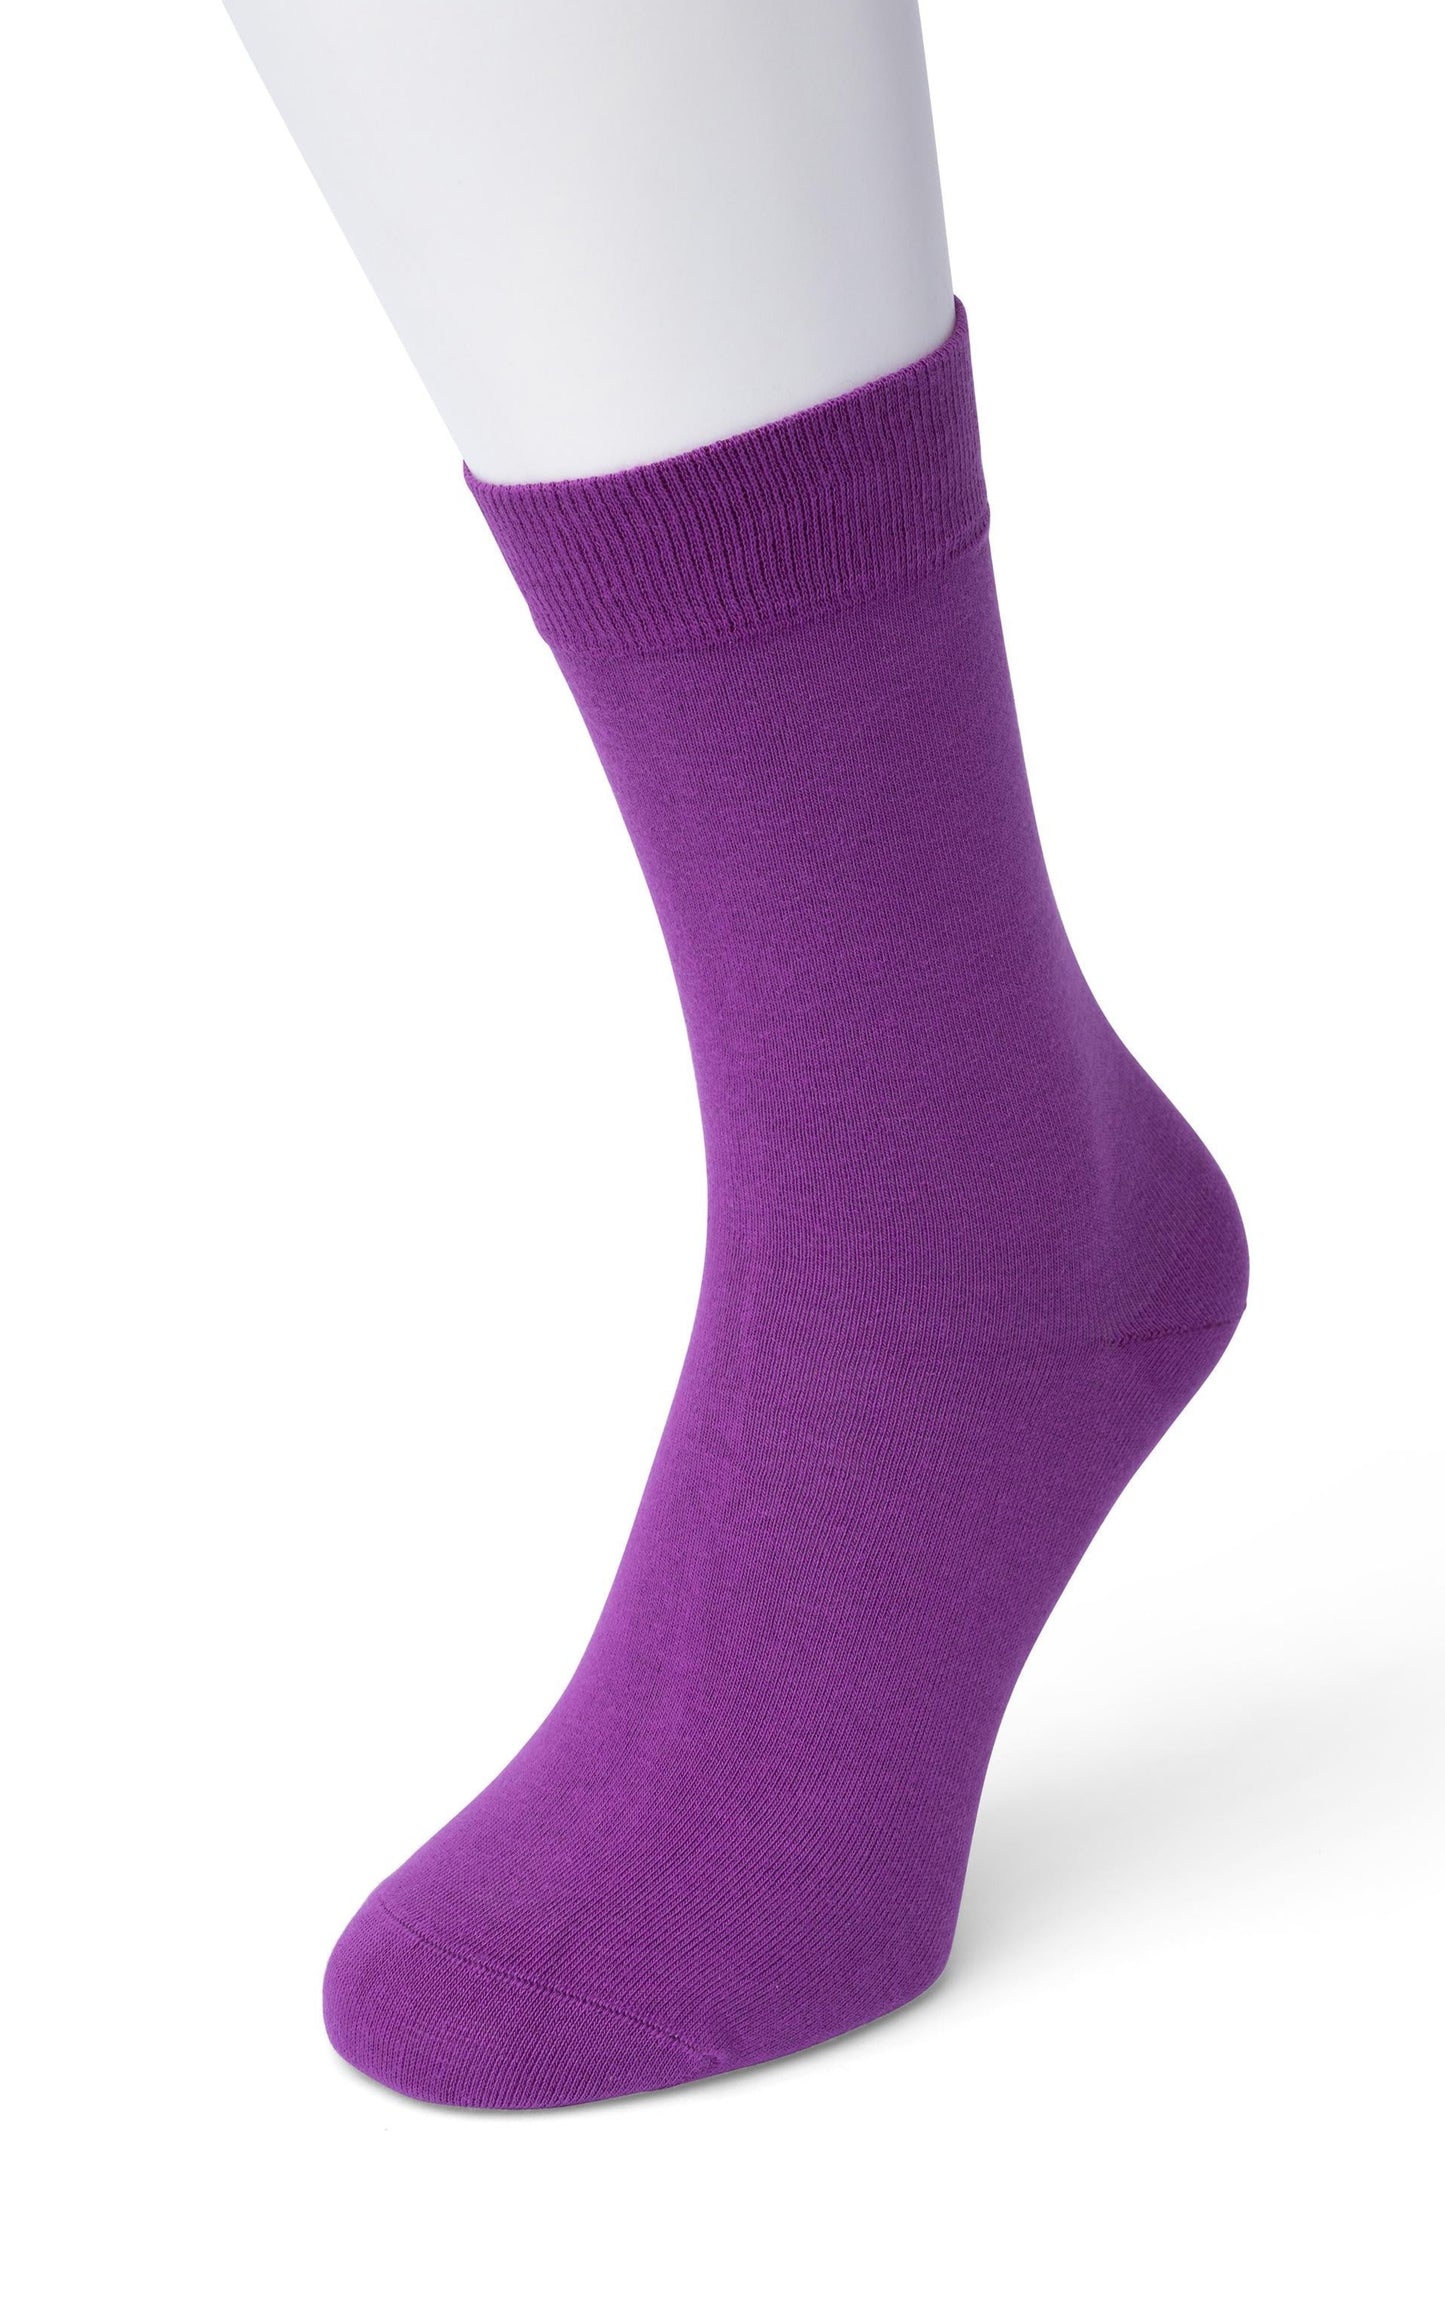 Bonnie Doon 83422 / BD632401 Cotton Sock -  Crocus light purple ankle socks available in men and women sizes